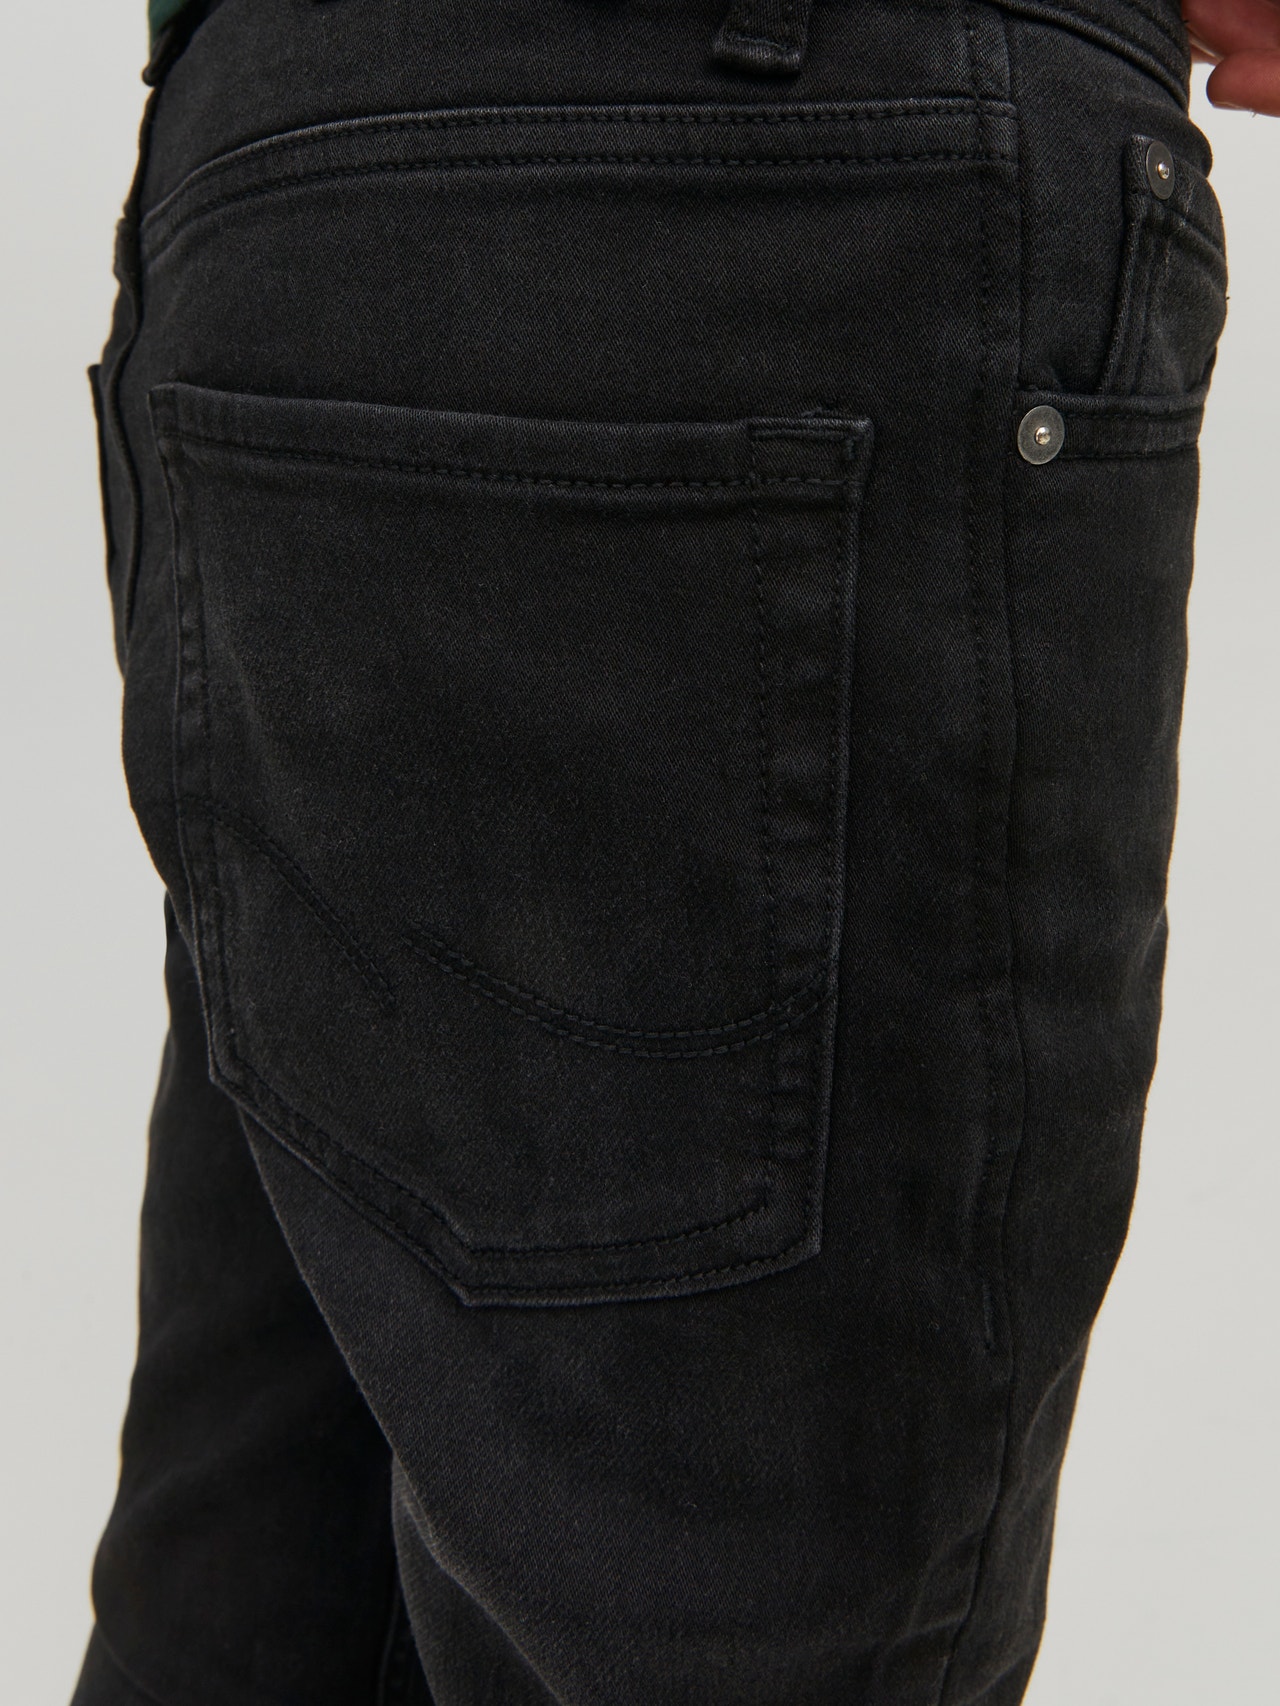 Jack & Jones JJILIAM JJORIGINAL MF 803 I.K Skinny fit jeans For boys -Black Denim - 12228064